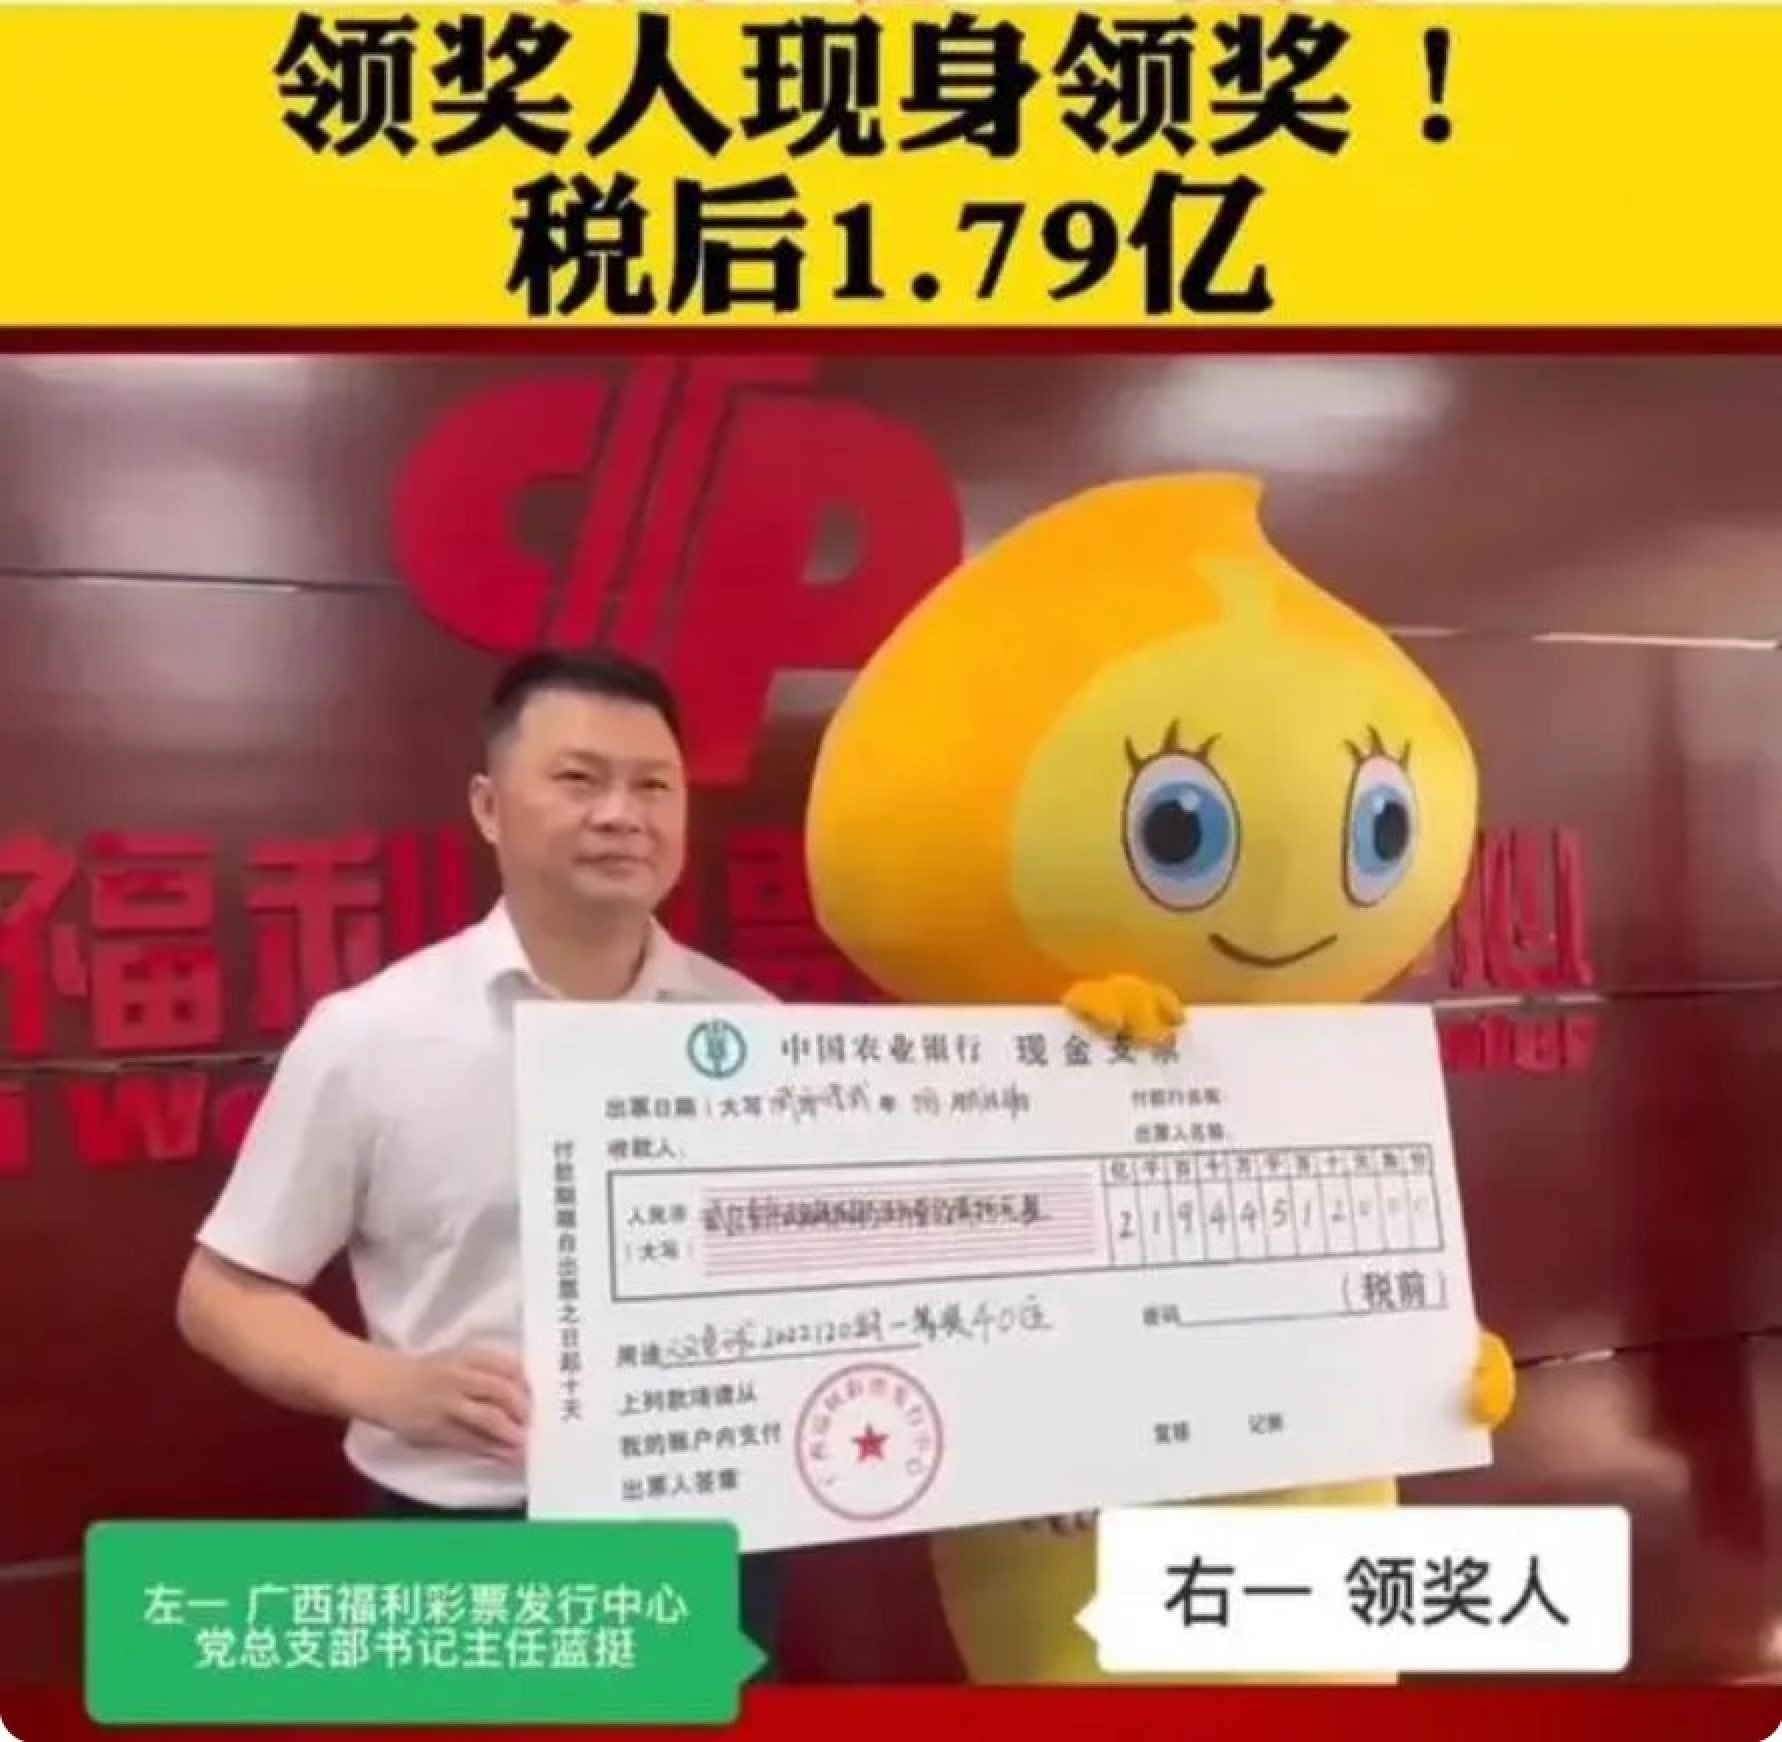 The man, surnamed Li (right), wears a cartoon costume to accept his lottery jackpot. Photo: Baidu